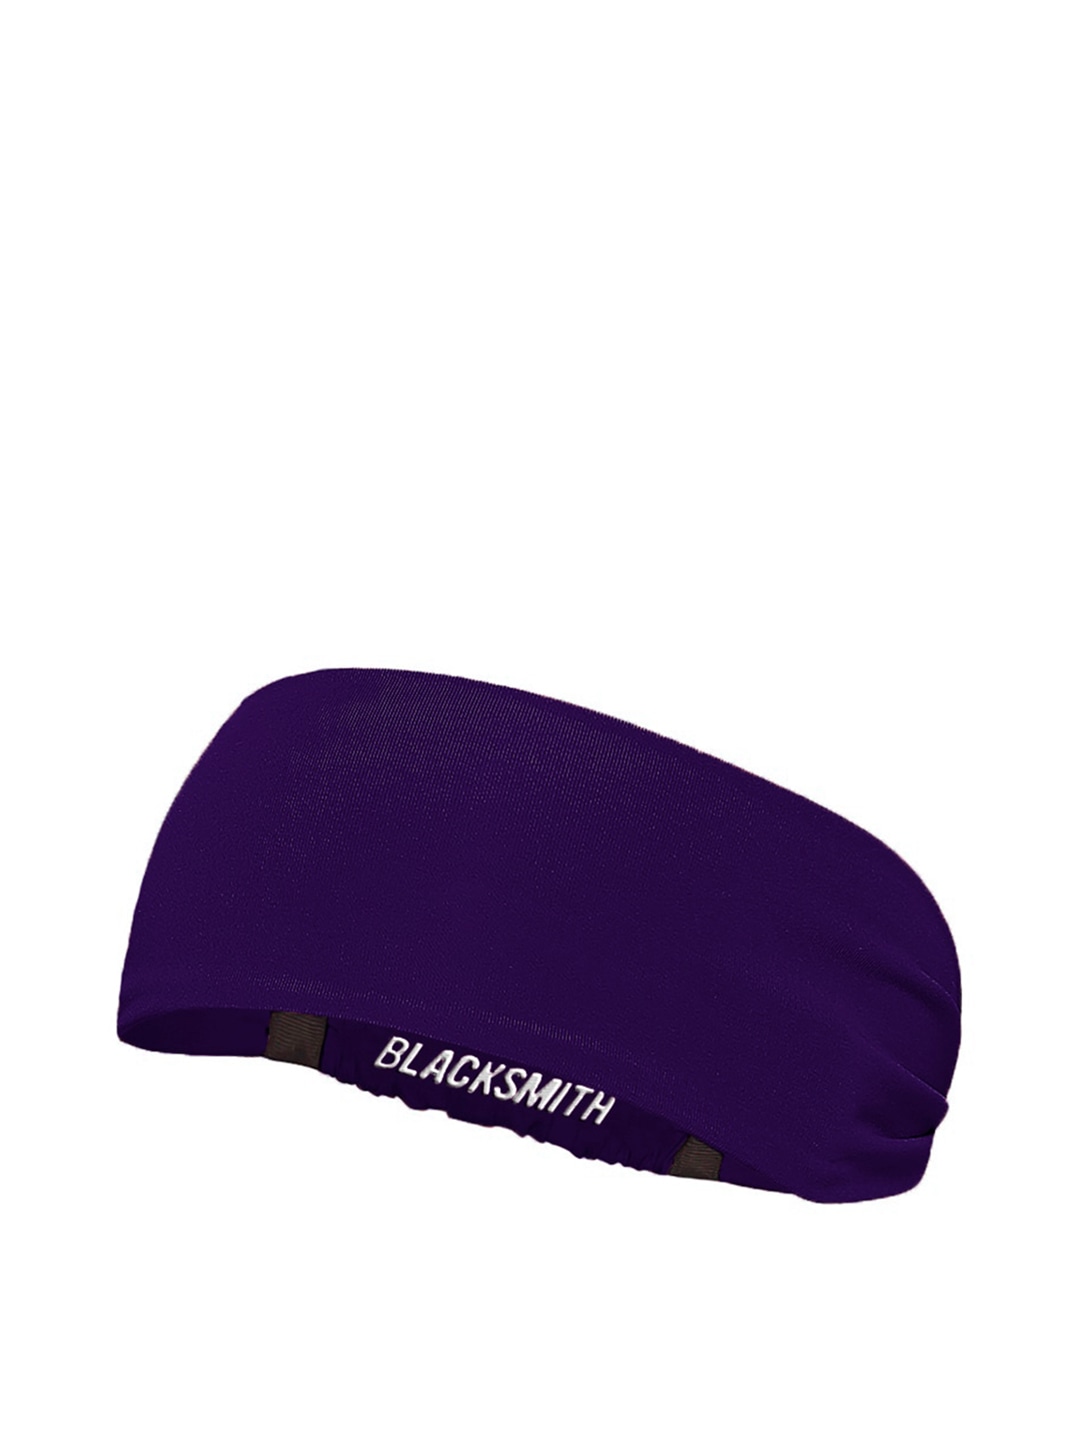 Accessories Headband | Blacksmith Purple Solid Bandana Headband - KD30517